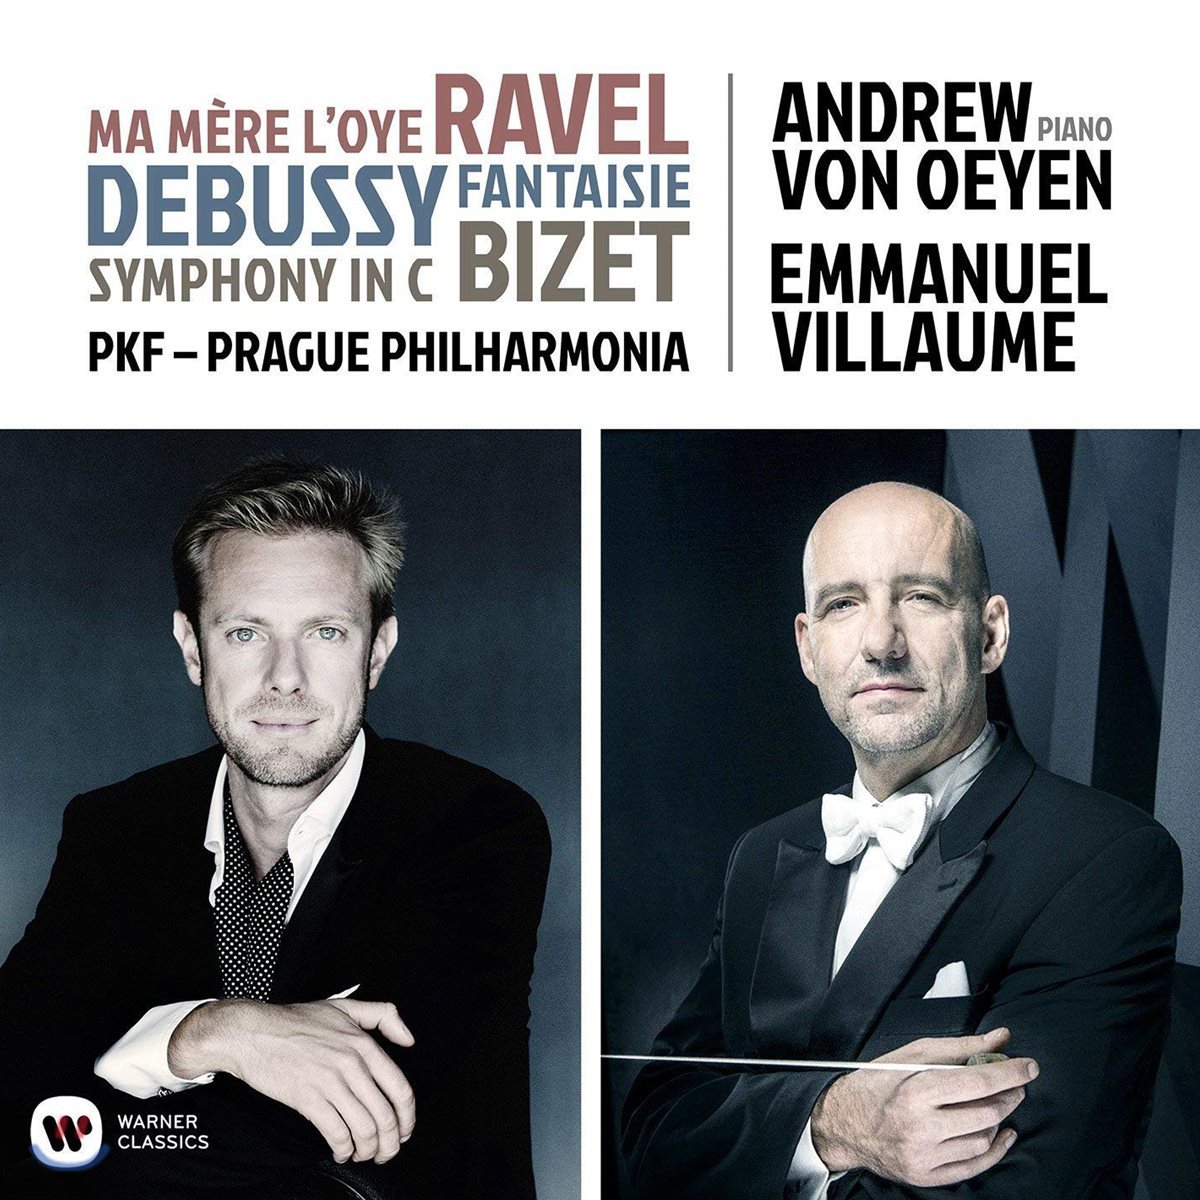 Andrew von Oeyen / Emmanuel Villaume 라벨: 어미 거위 / 드뷔시: 환상곡 / 비제: 교향곡 (Ravel: Ma Mere L'oye / Debussy: Fantaisie / Bizet: Symphony in C)